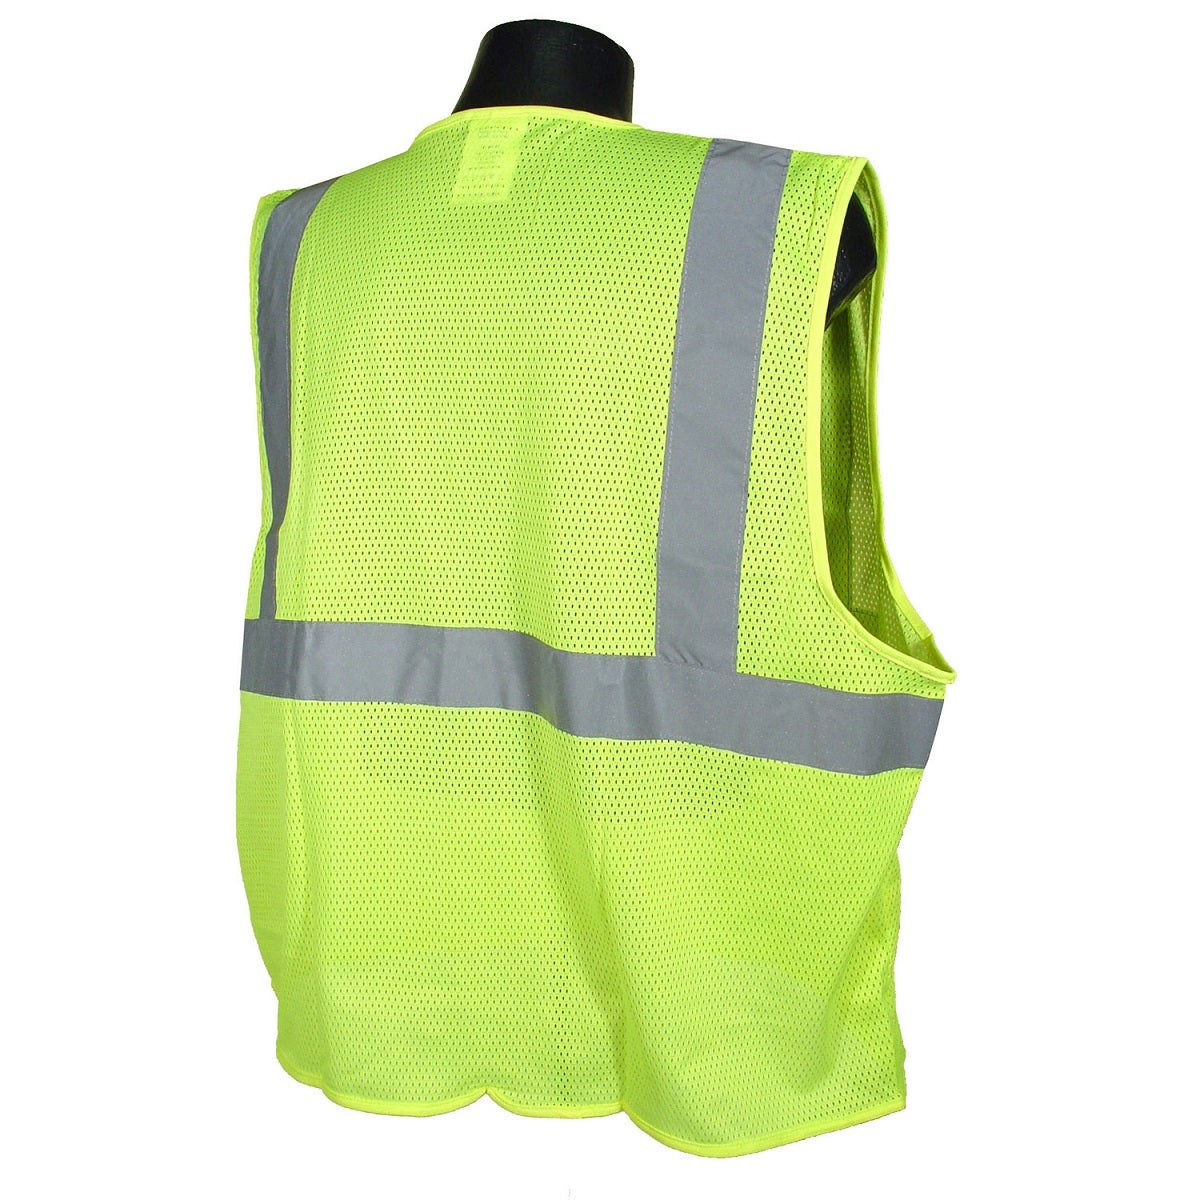 Radians Economy Class 2 Mesh Safety Vest with Zipper, SV2